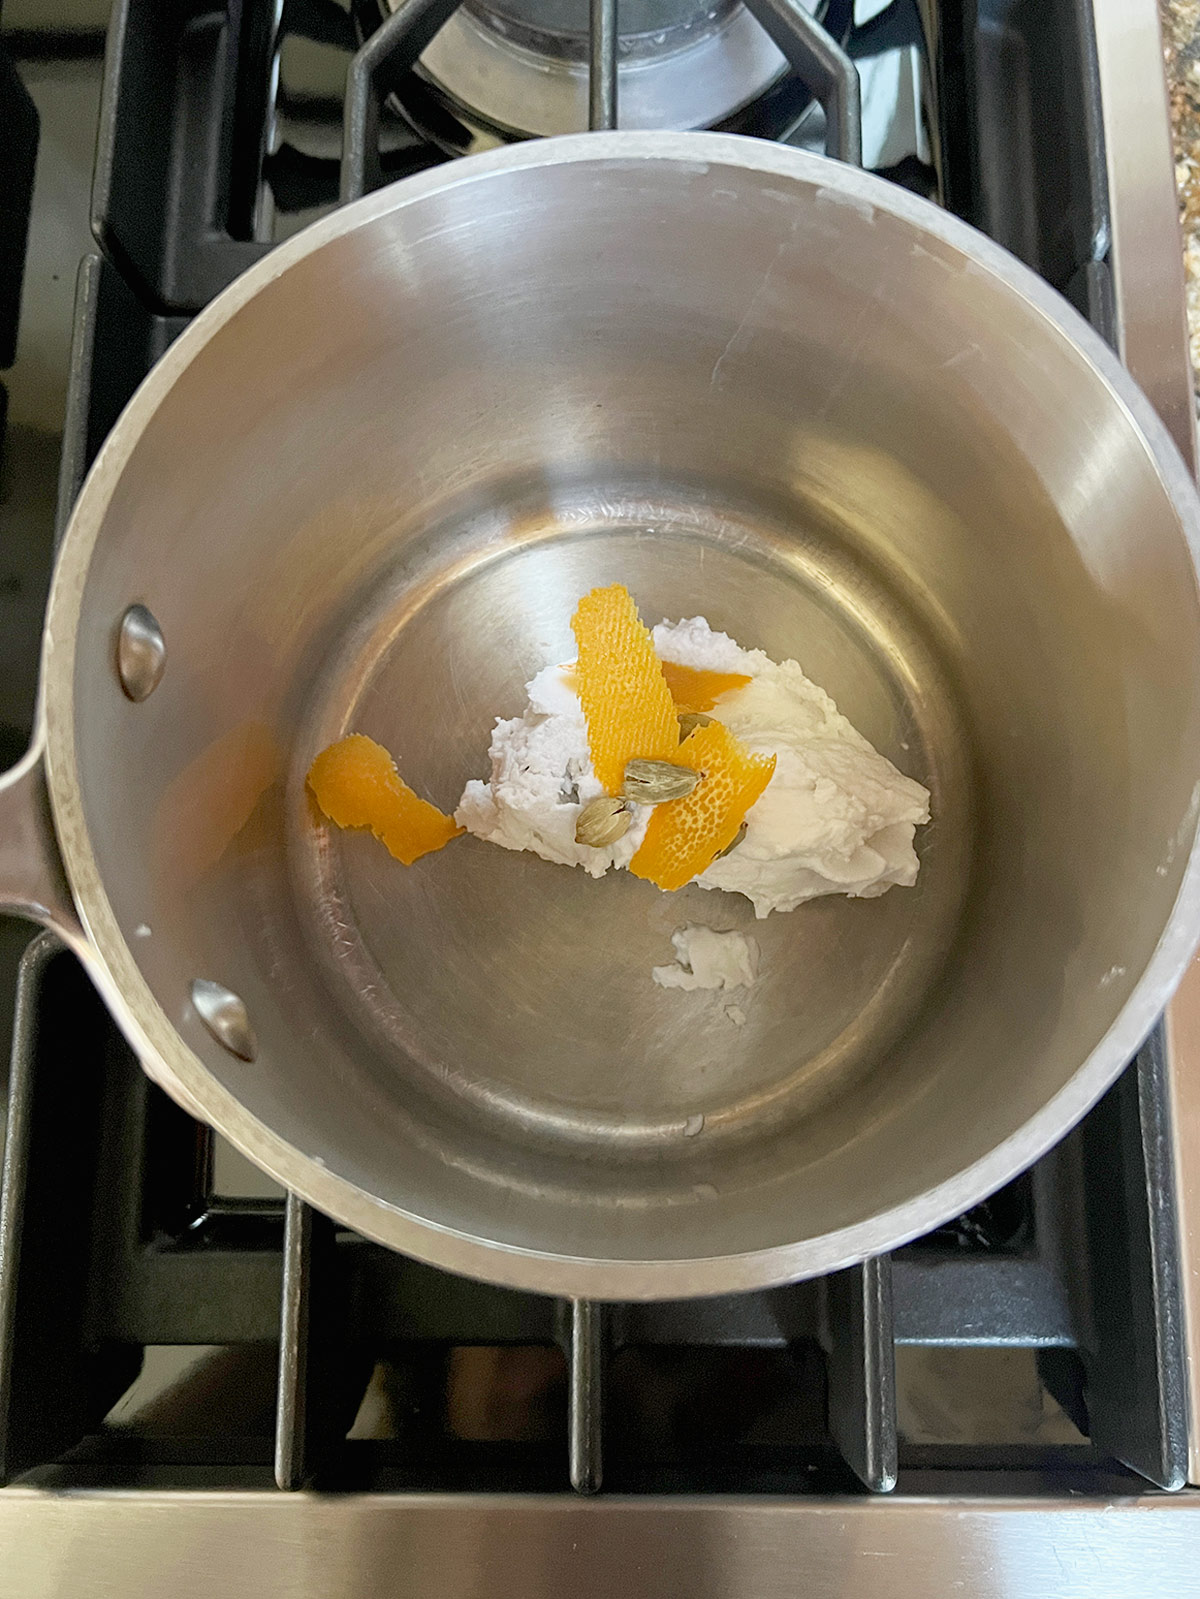 Coconut cream, cardamom and orange zest in a pot.